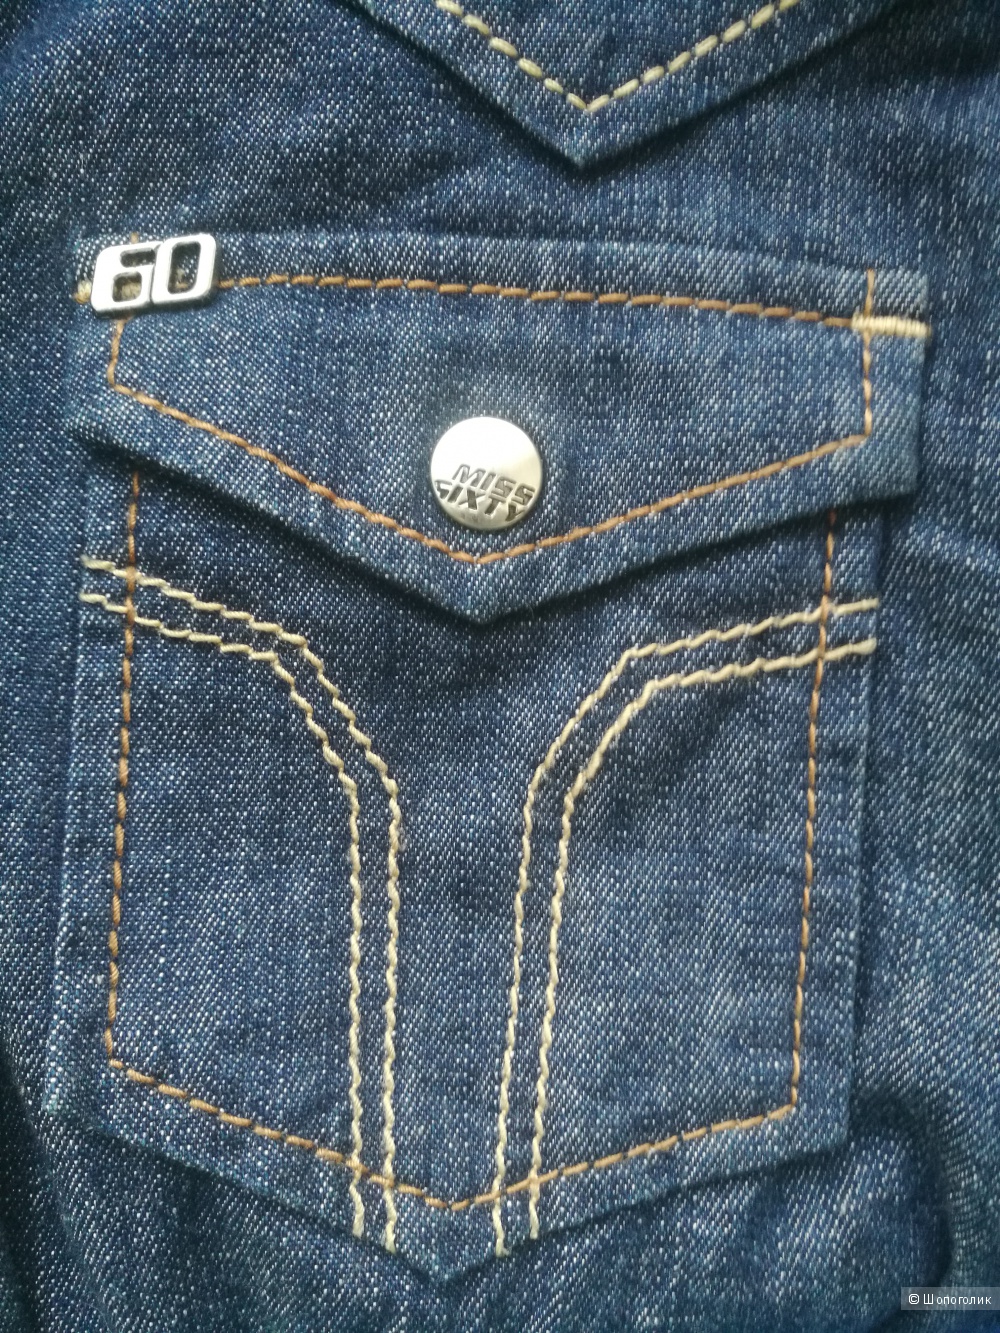 Рубашка джинсовая Miss sixty M